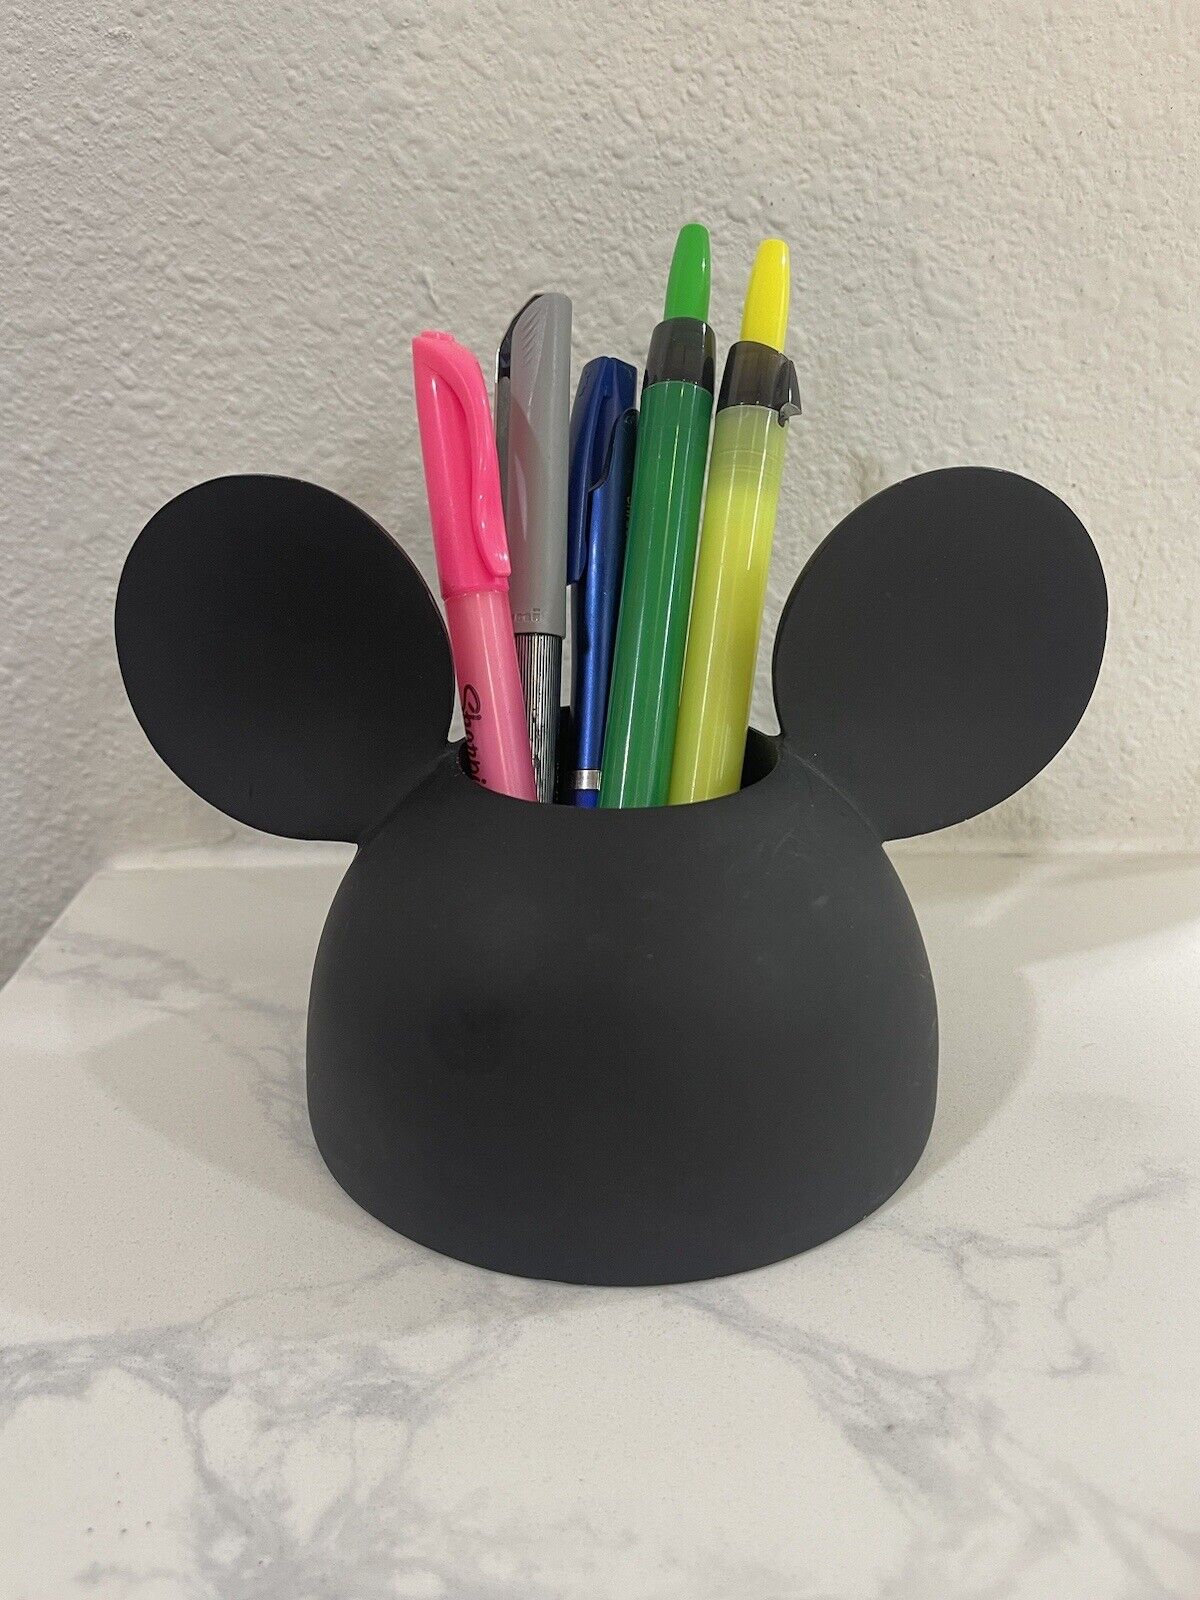 Disney Mickey Mouse Ears Desk Organizer - Vintage Collectible